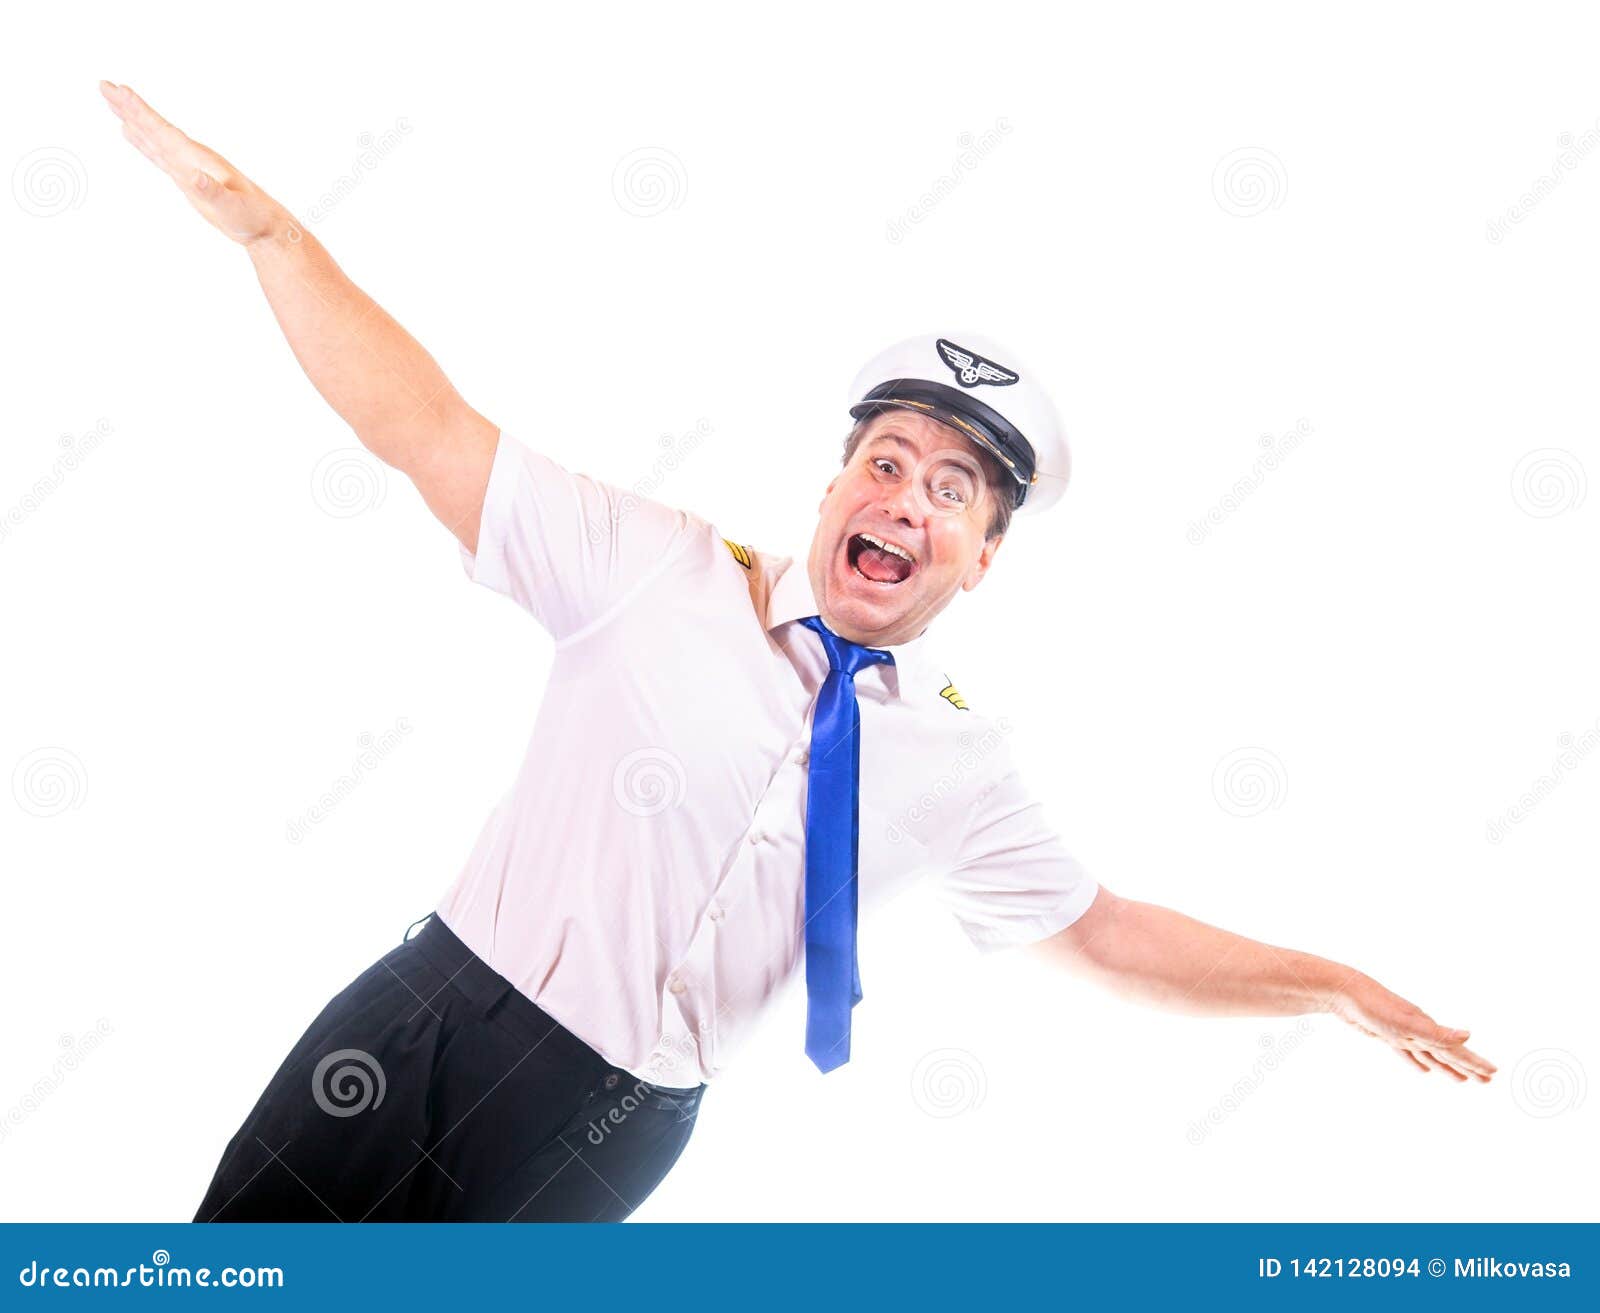 happy-laughing-pilot-uniform-gesturing-flight-happy-laughing-pilot-uniform-gesturing-flight-isolated-white-background-142128094.jpg